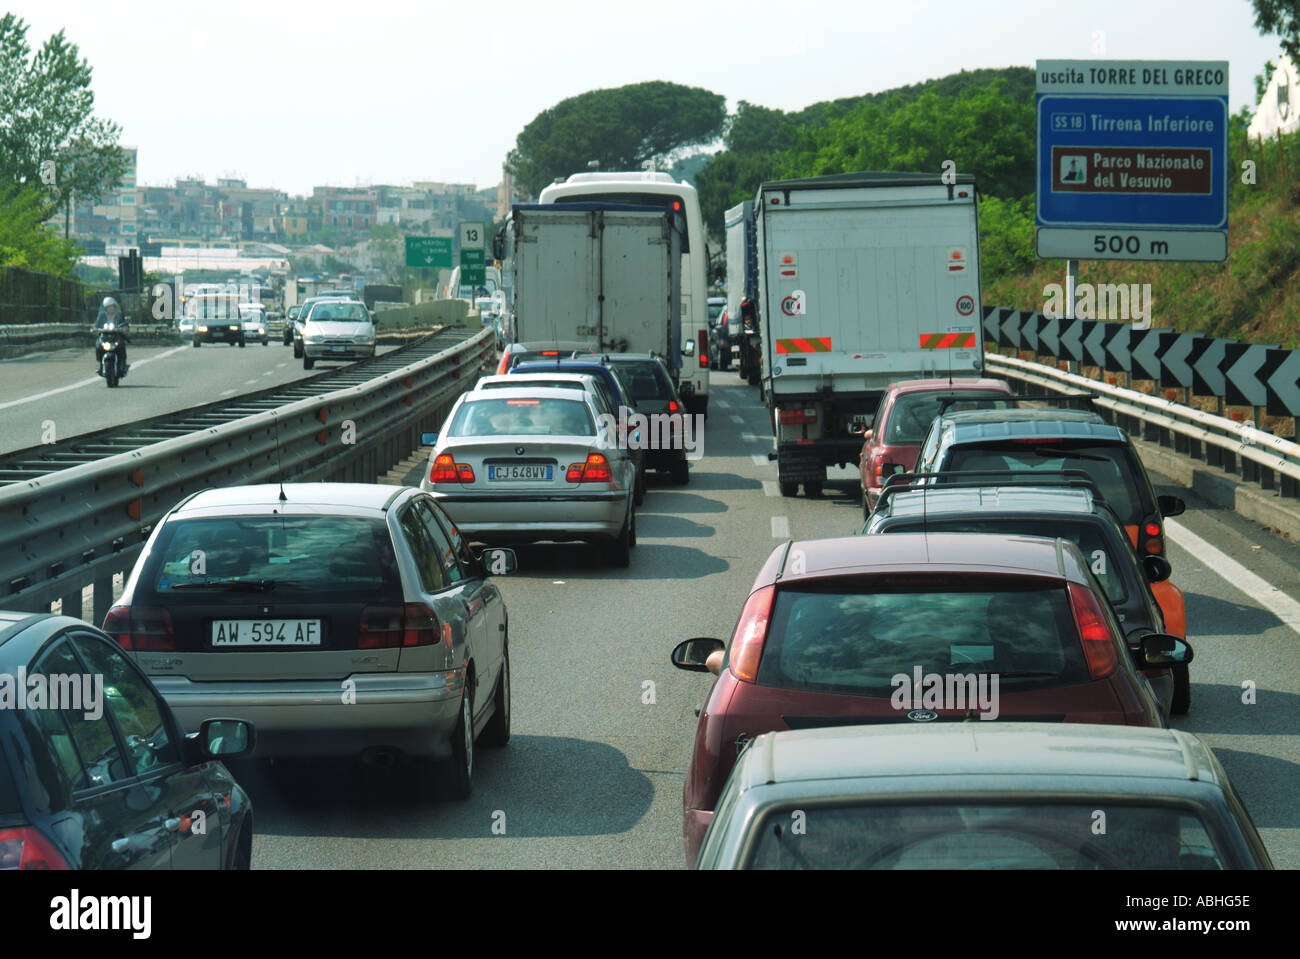 Motorists stuck in grid lock traffic jam on Italian toll road heading towards Naples Stock Photo